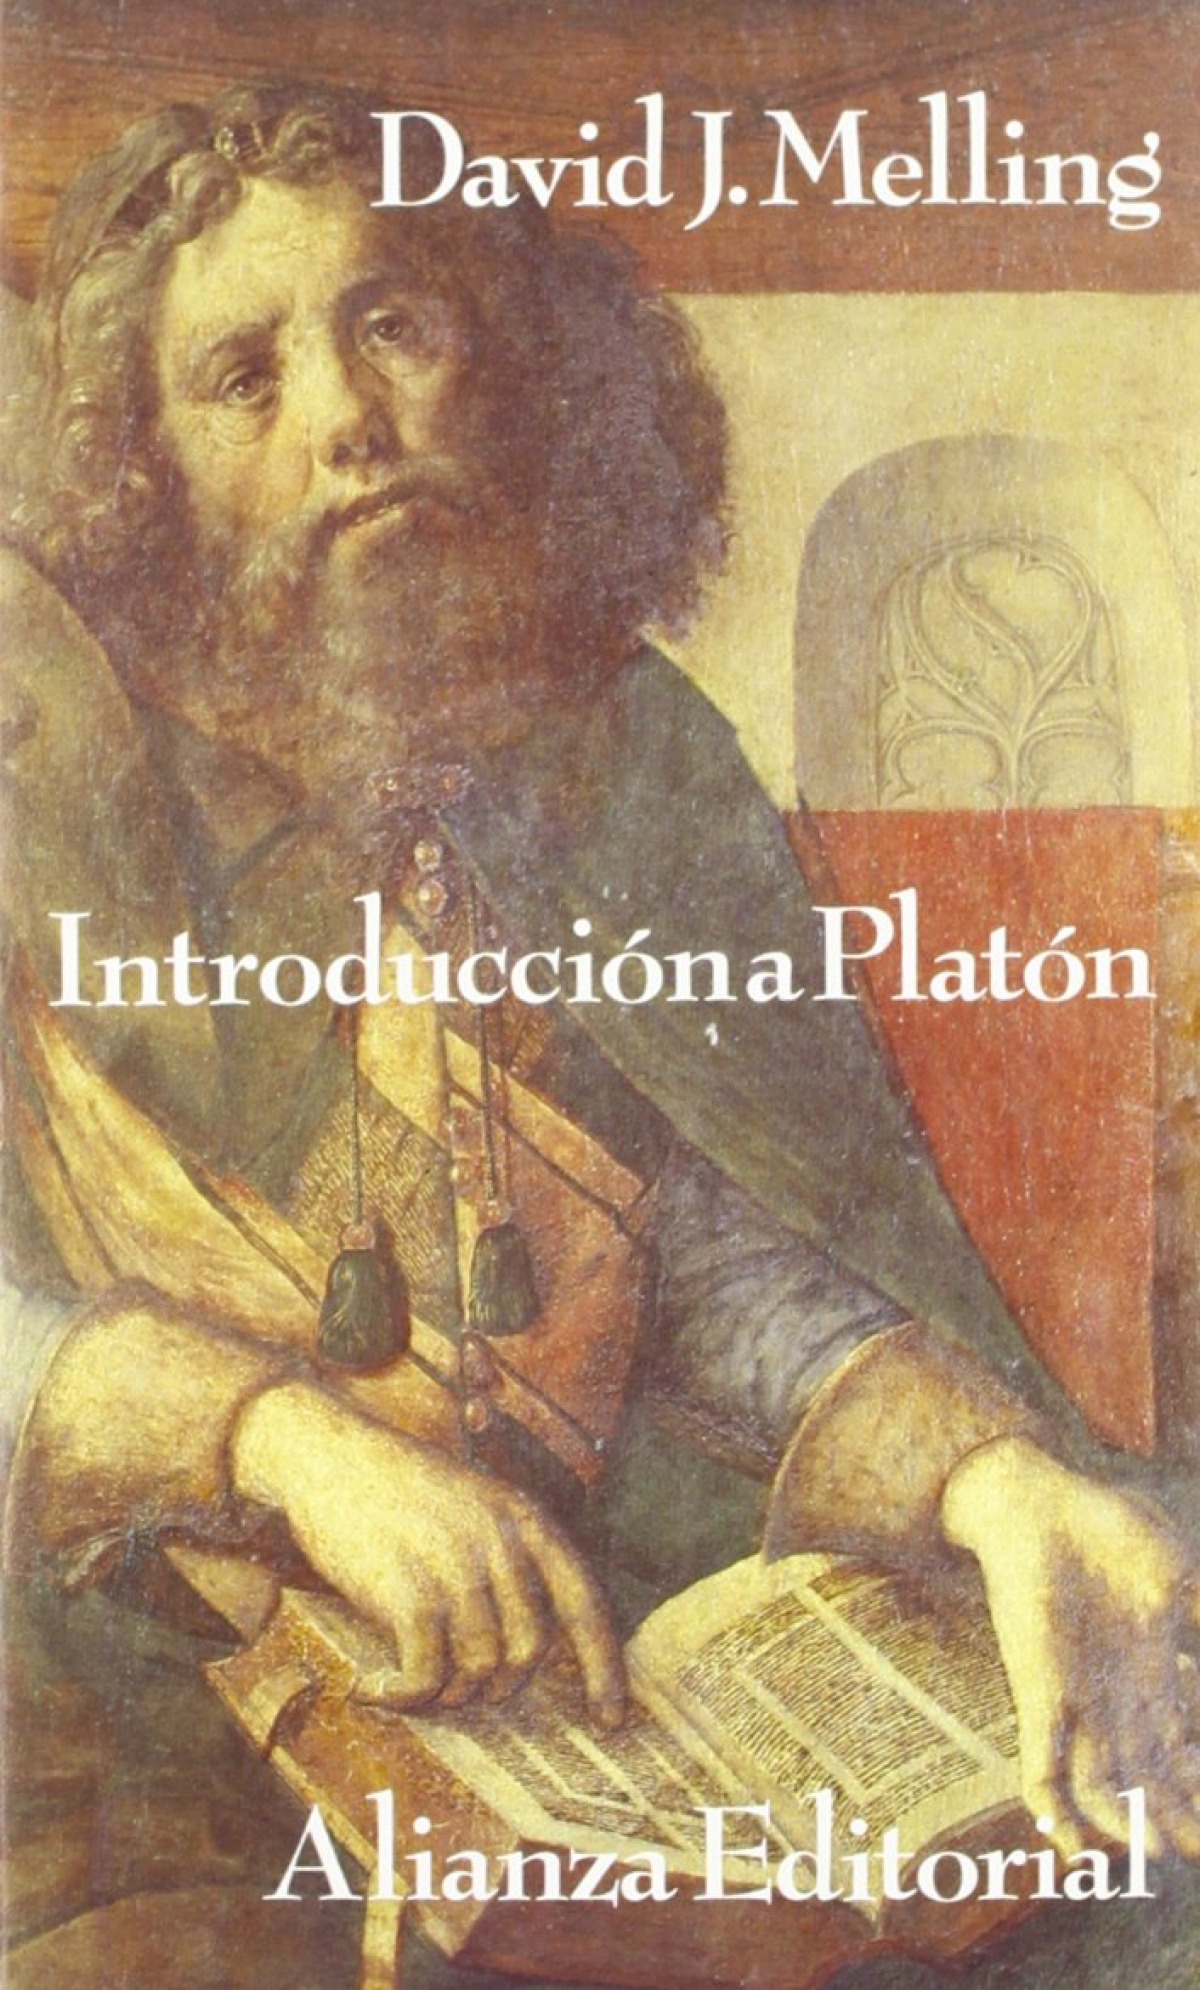 Introduccion a platon - Melling, David J.